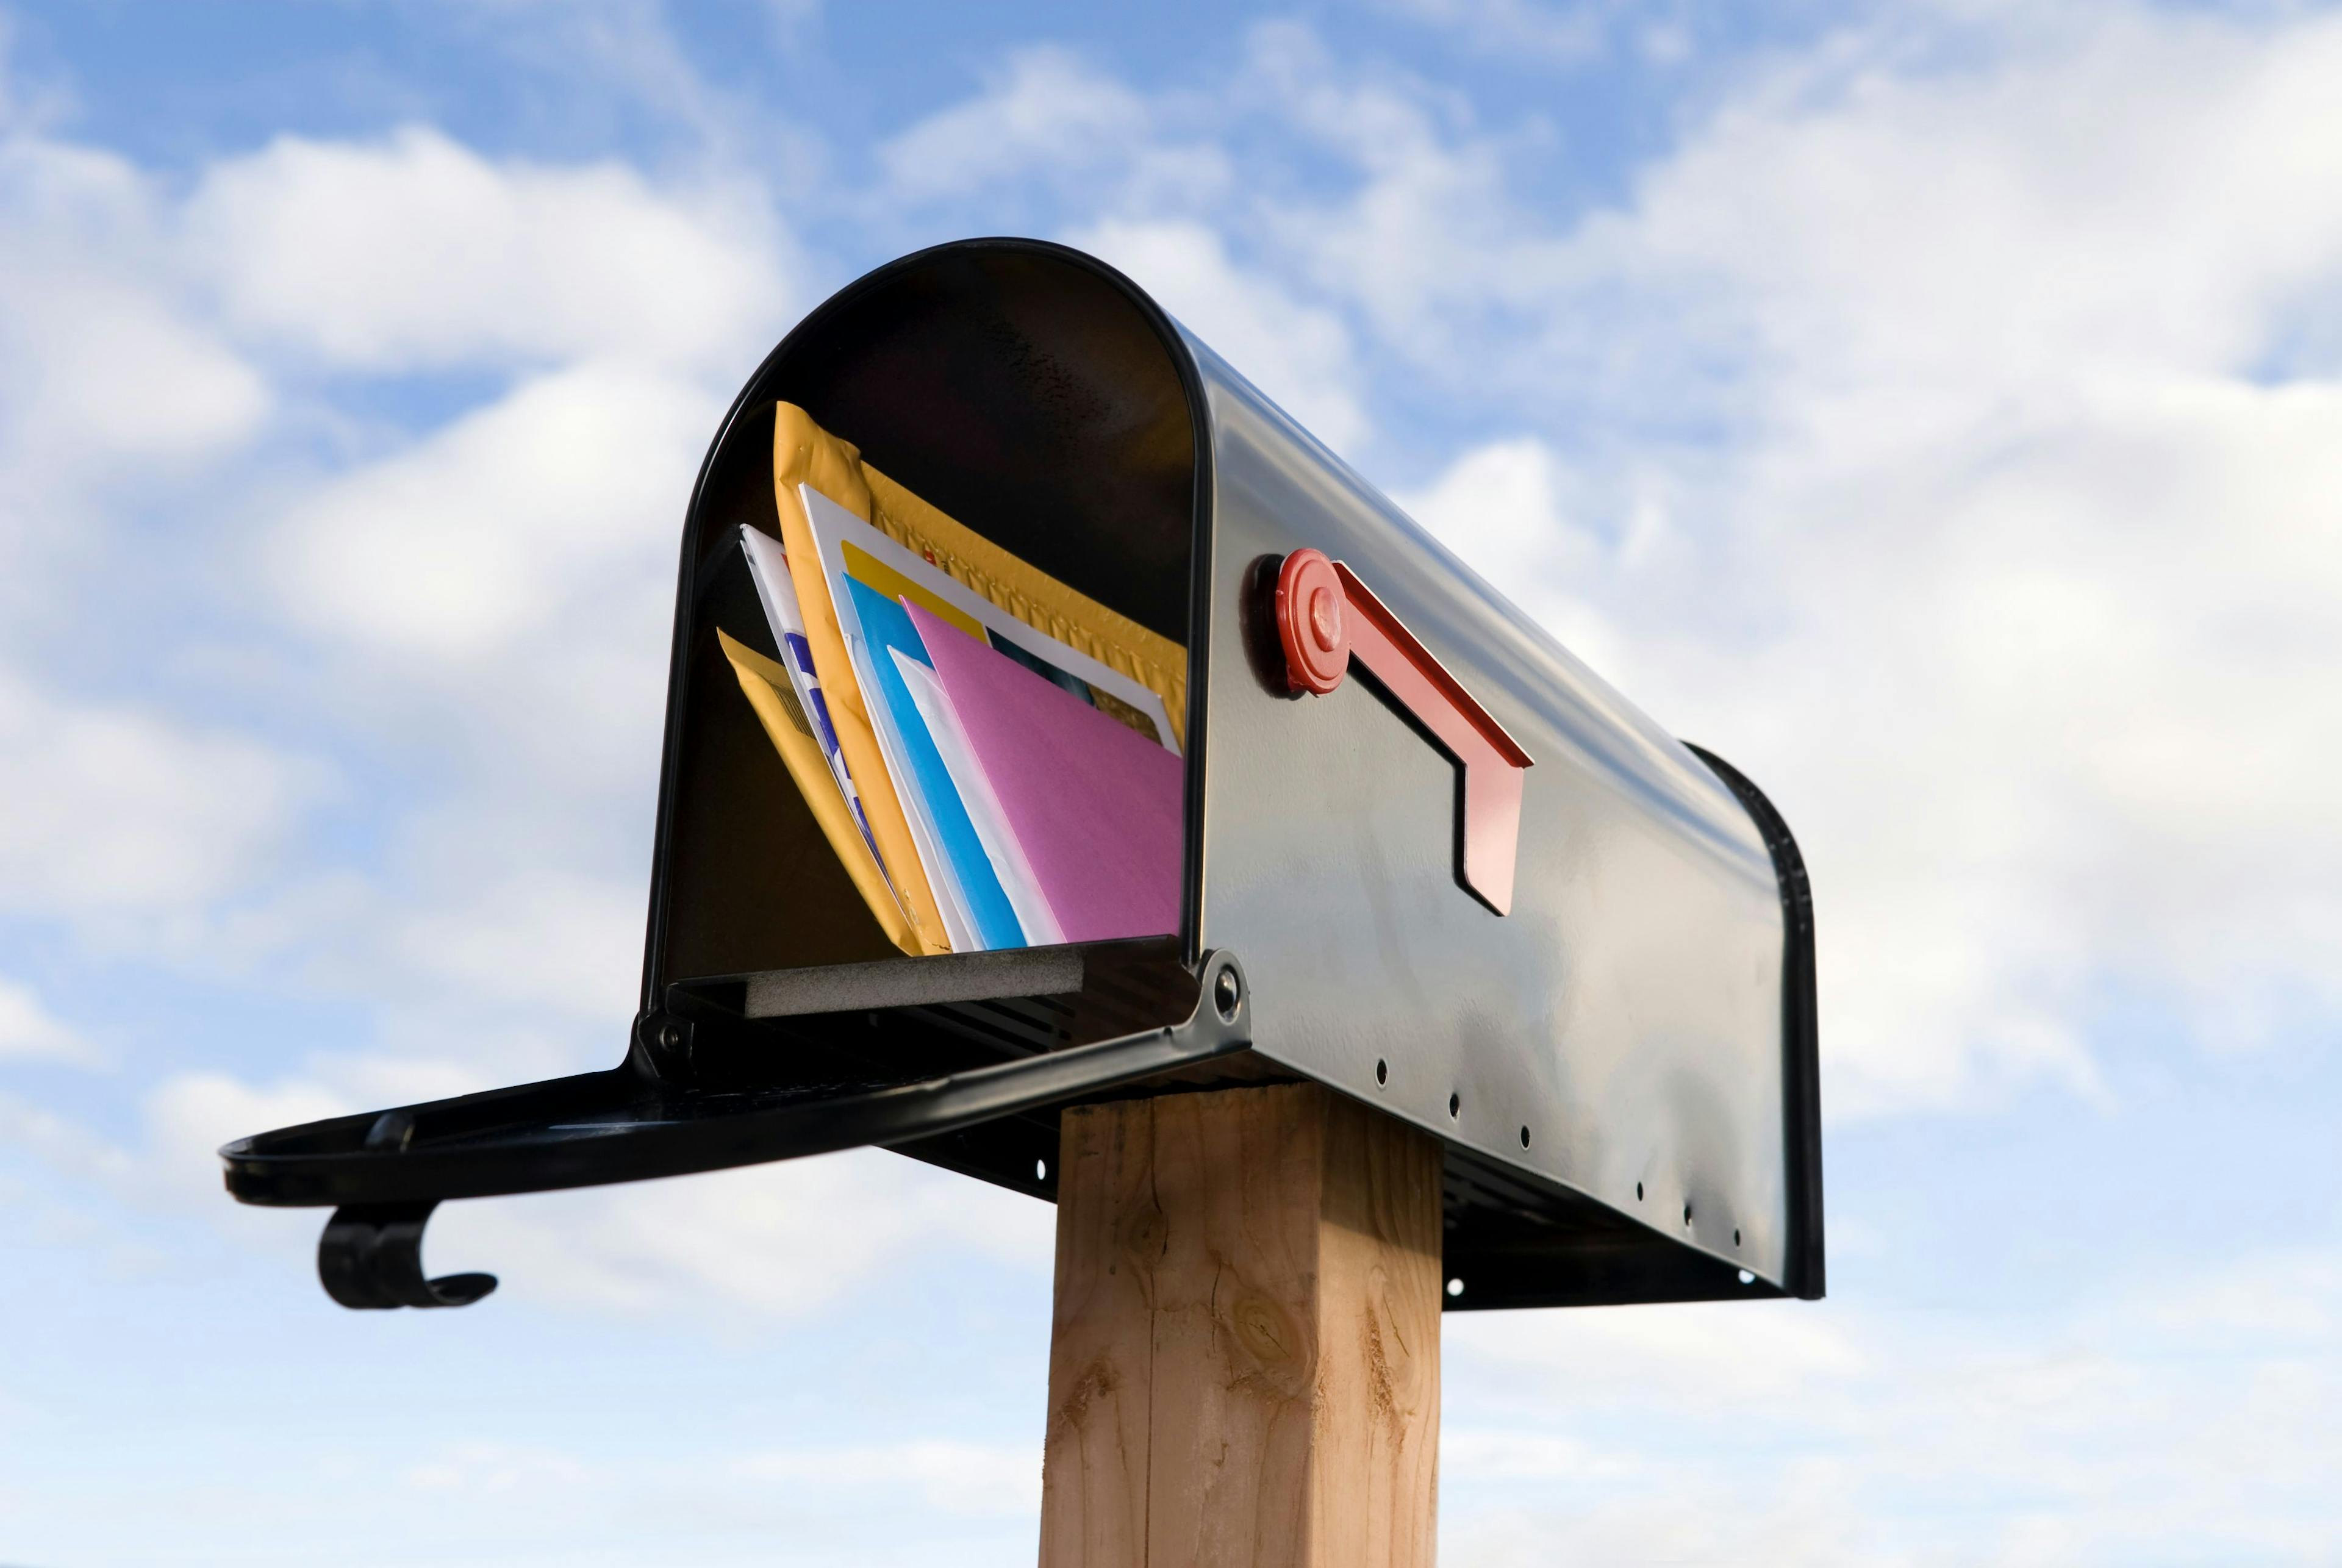 Mailbox and mail | Image Credit: © cherylvb - stock.adobe.com.